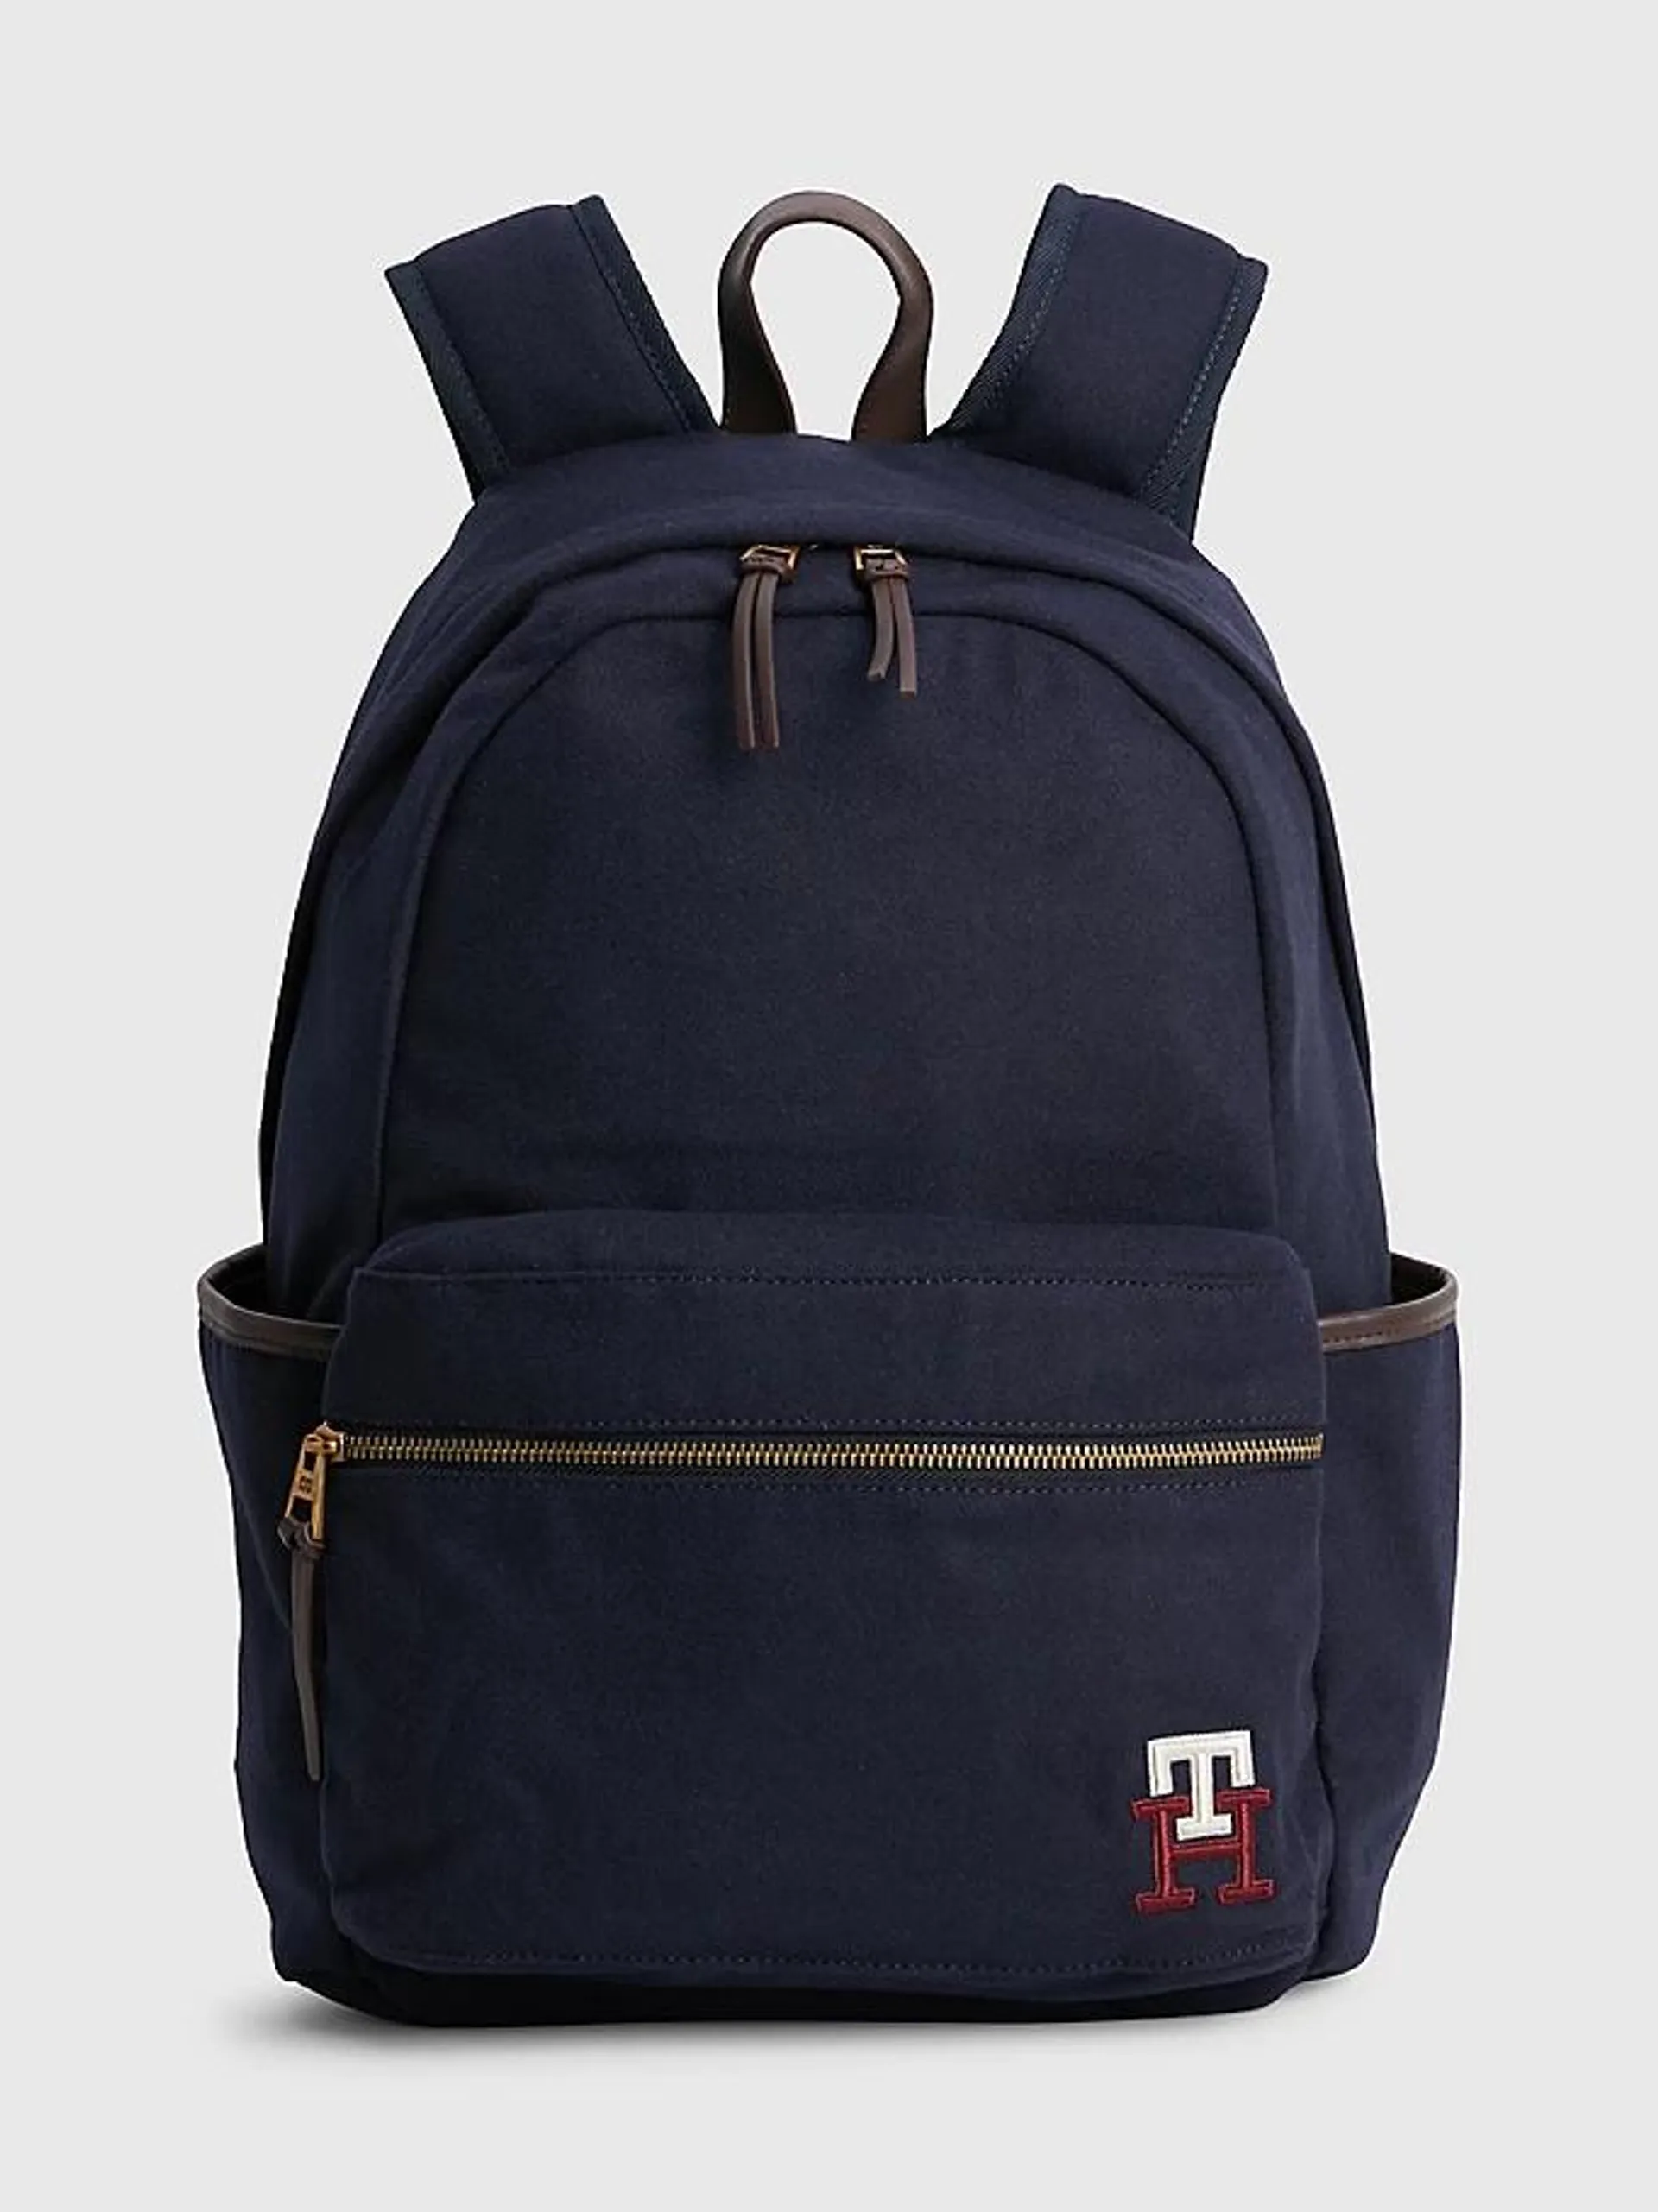 Prep TH Monogram Backpack